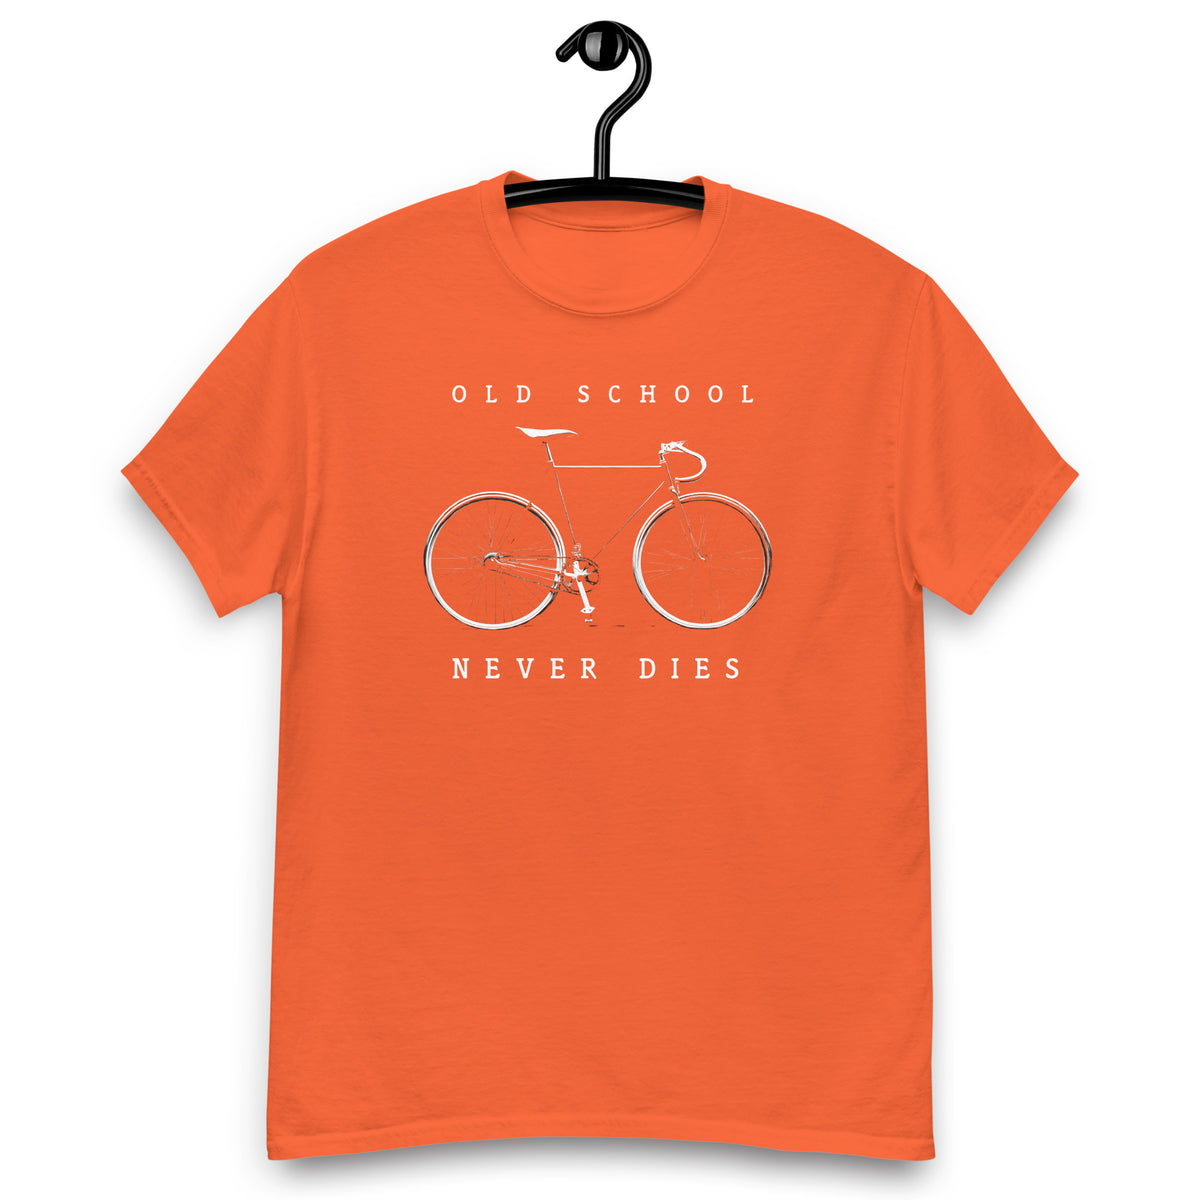 Fahrrad Shirts " Old School Never Dies"